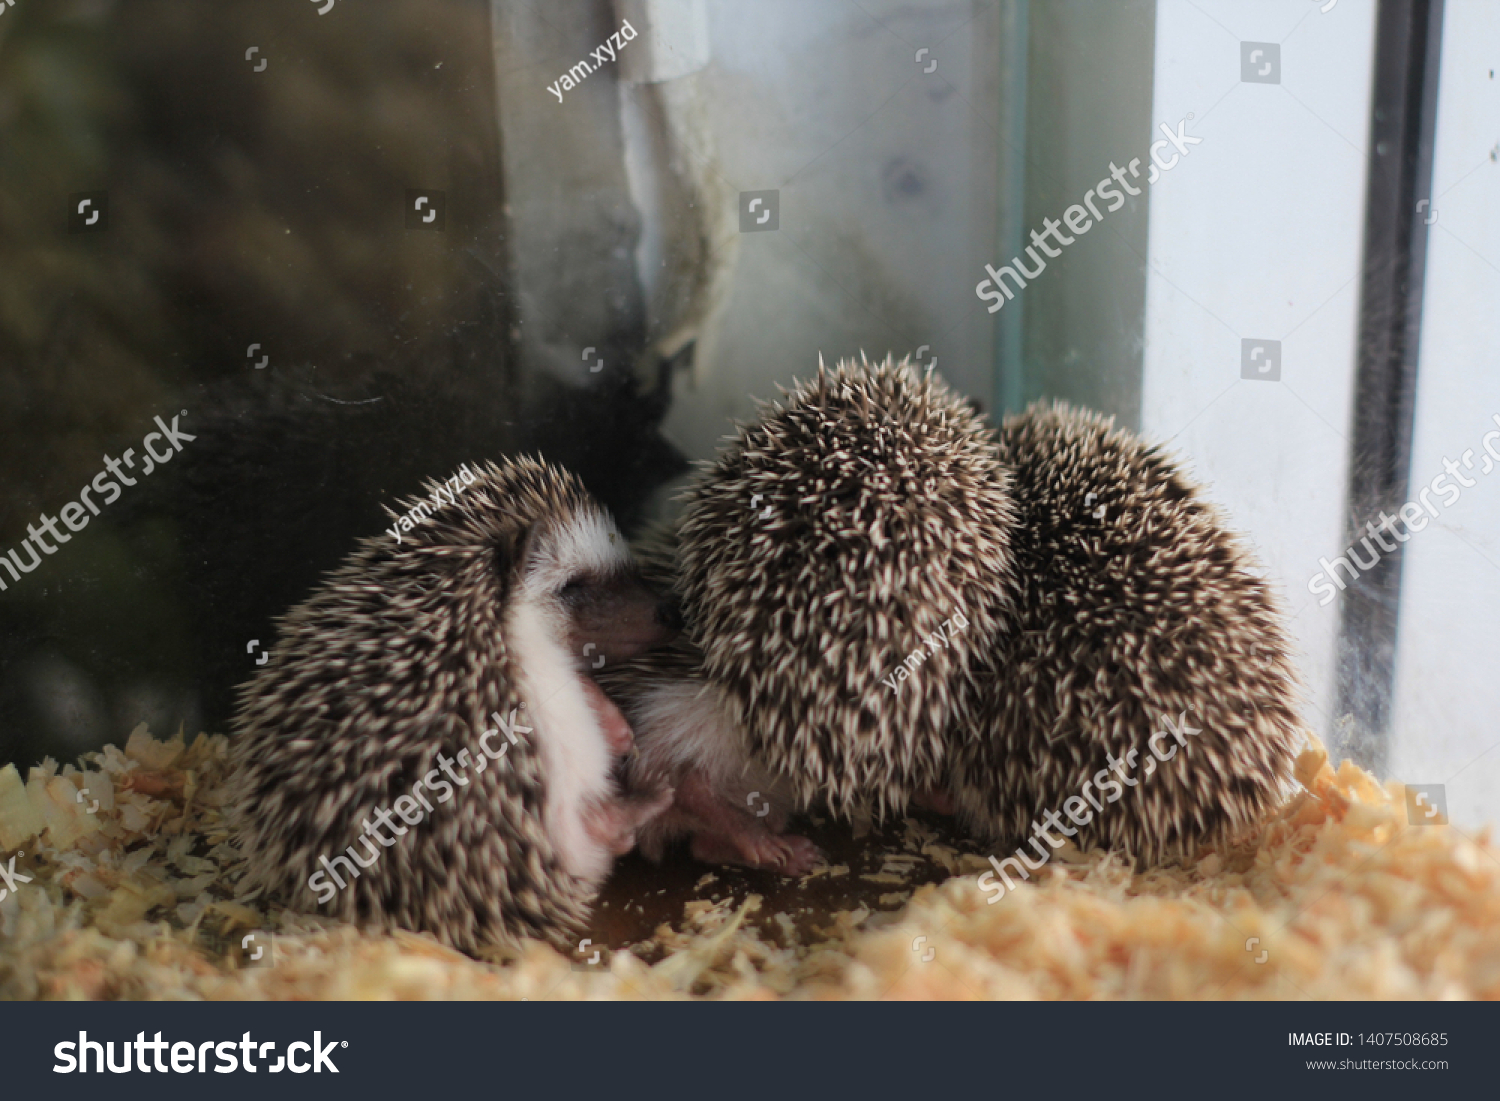 3 Shy Hedgehogs Glass Tank Stock Photo Edit Now 1407508685,Bridal Shower Games Pinterest